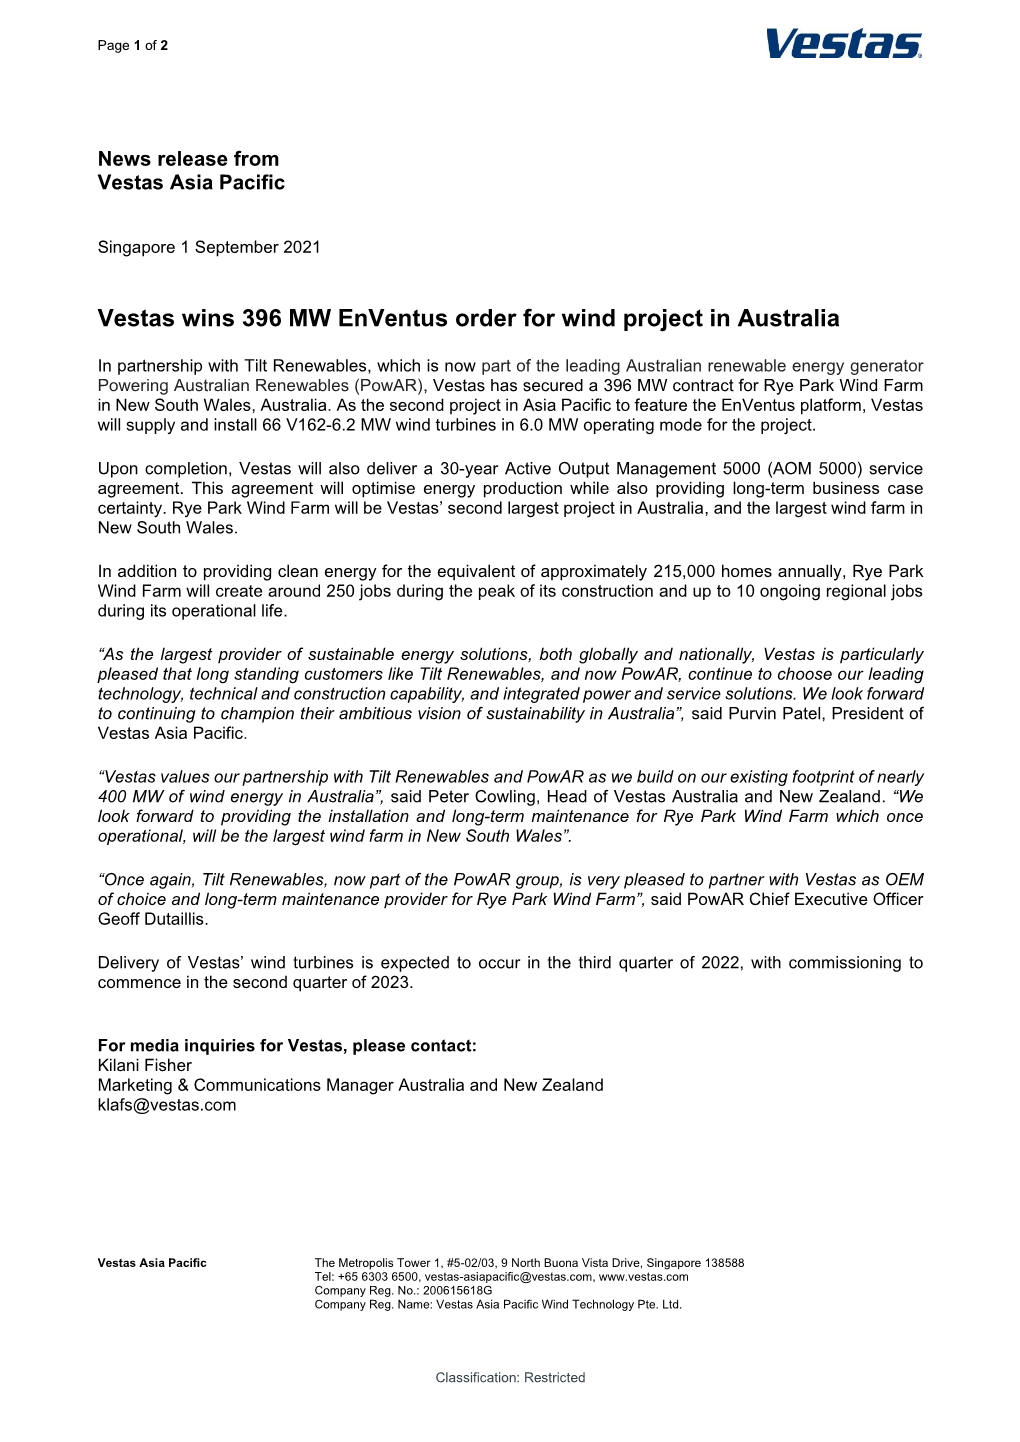 Vestas Wins 396 MW Enventus Order for Wind Project in Australia